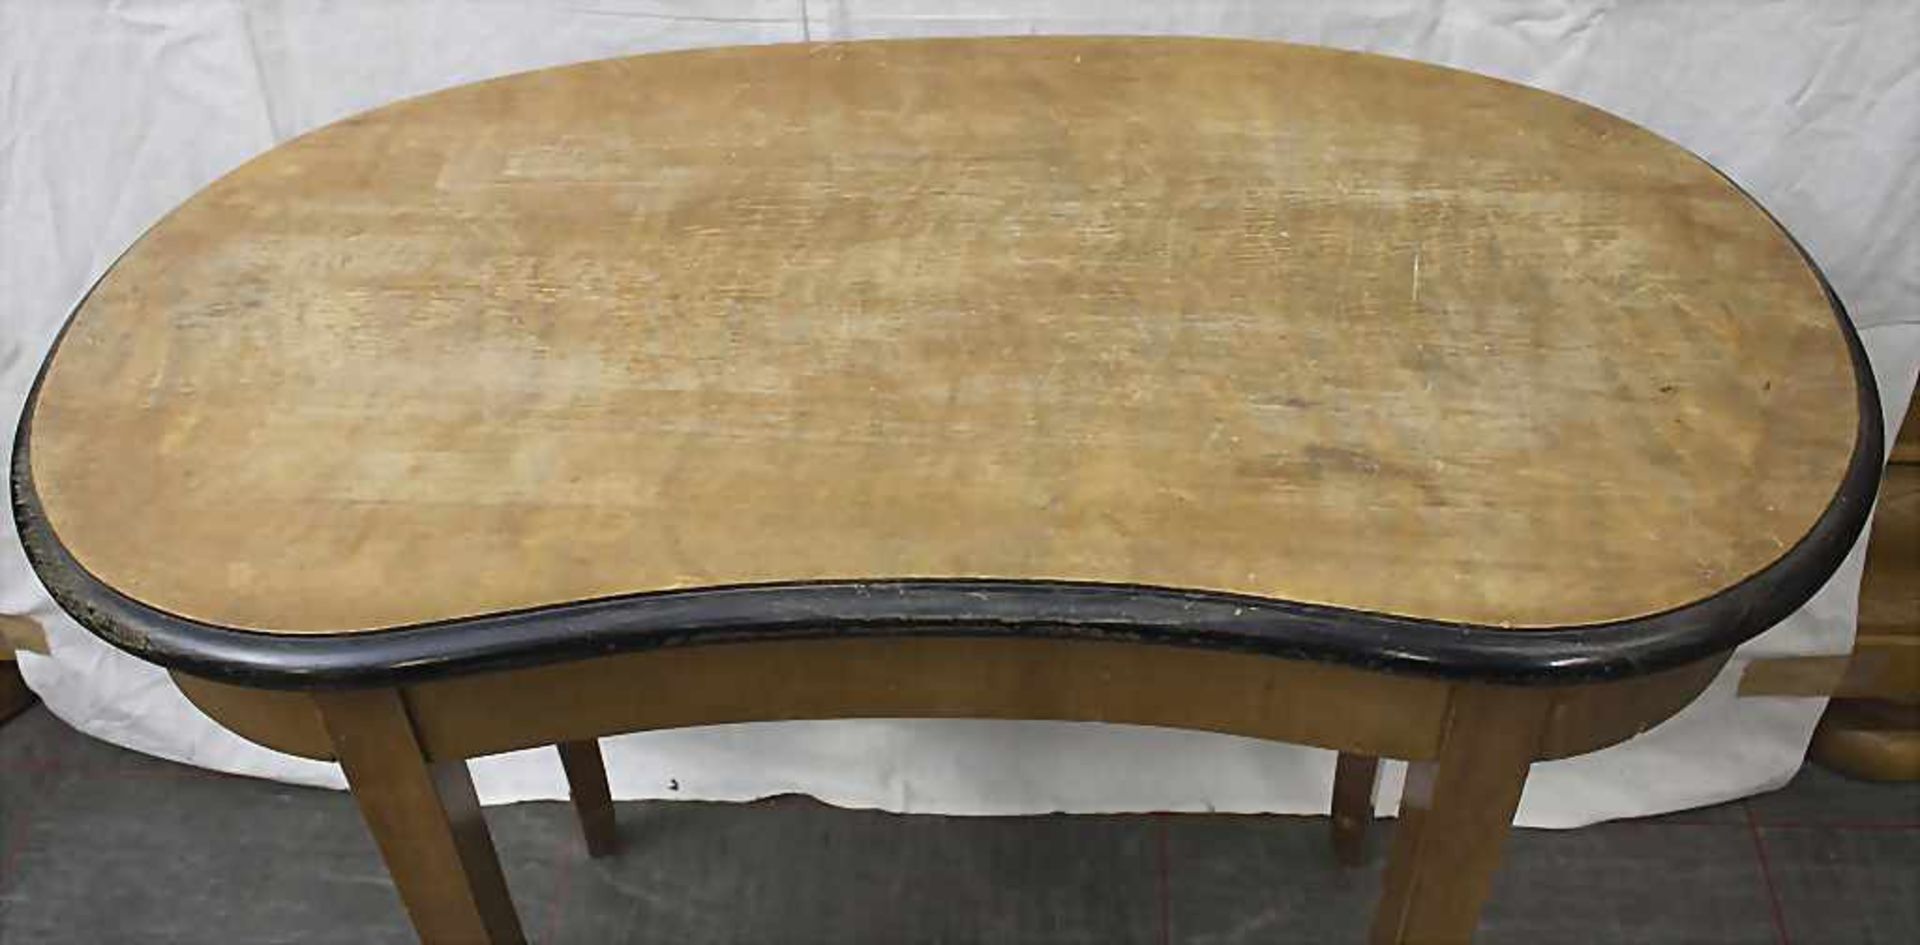 Nierenförmiger Tisch / A kidney-shaped table, 19. Jh.< - Bild 2 aus 3